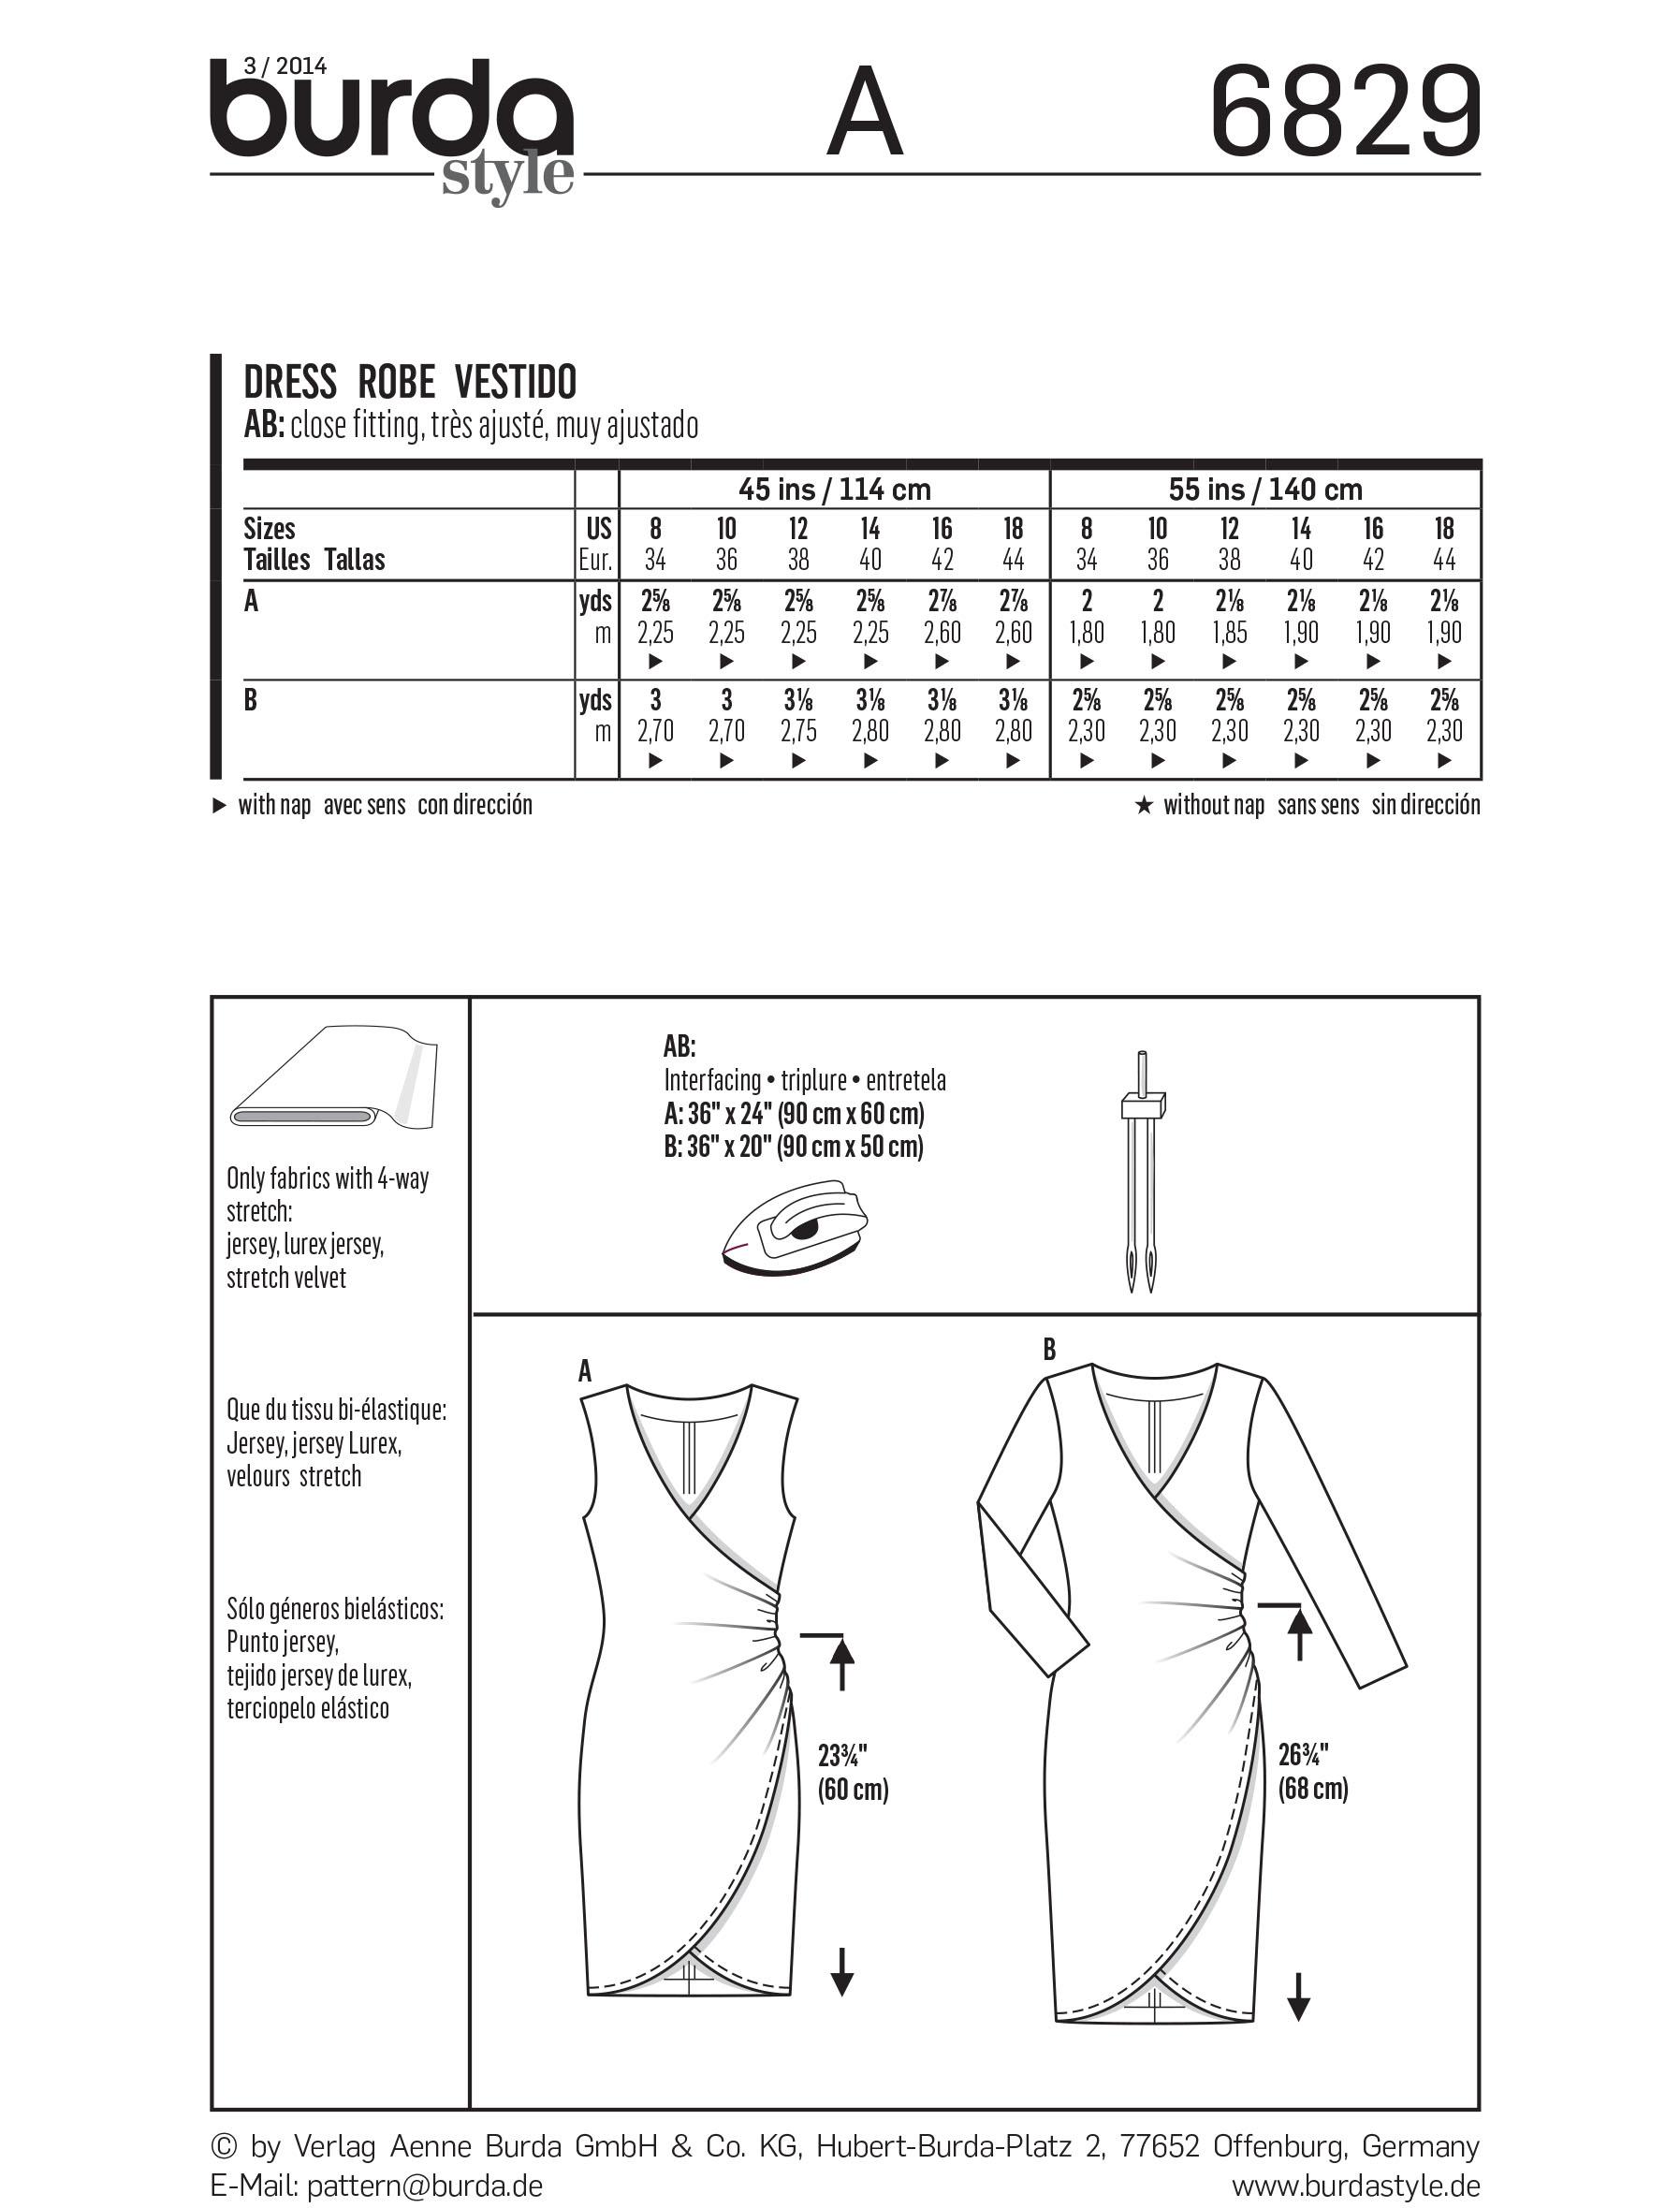 Burda B6829 Burda dresses Sewing Pattern